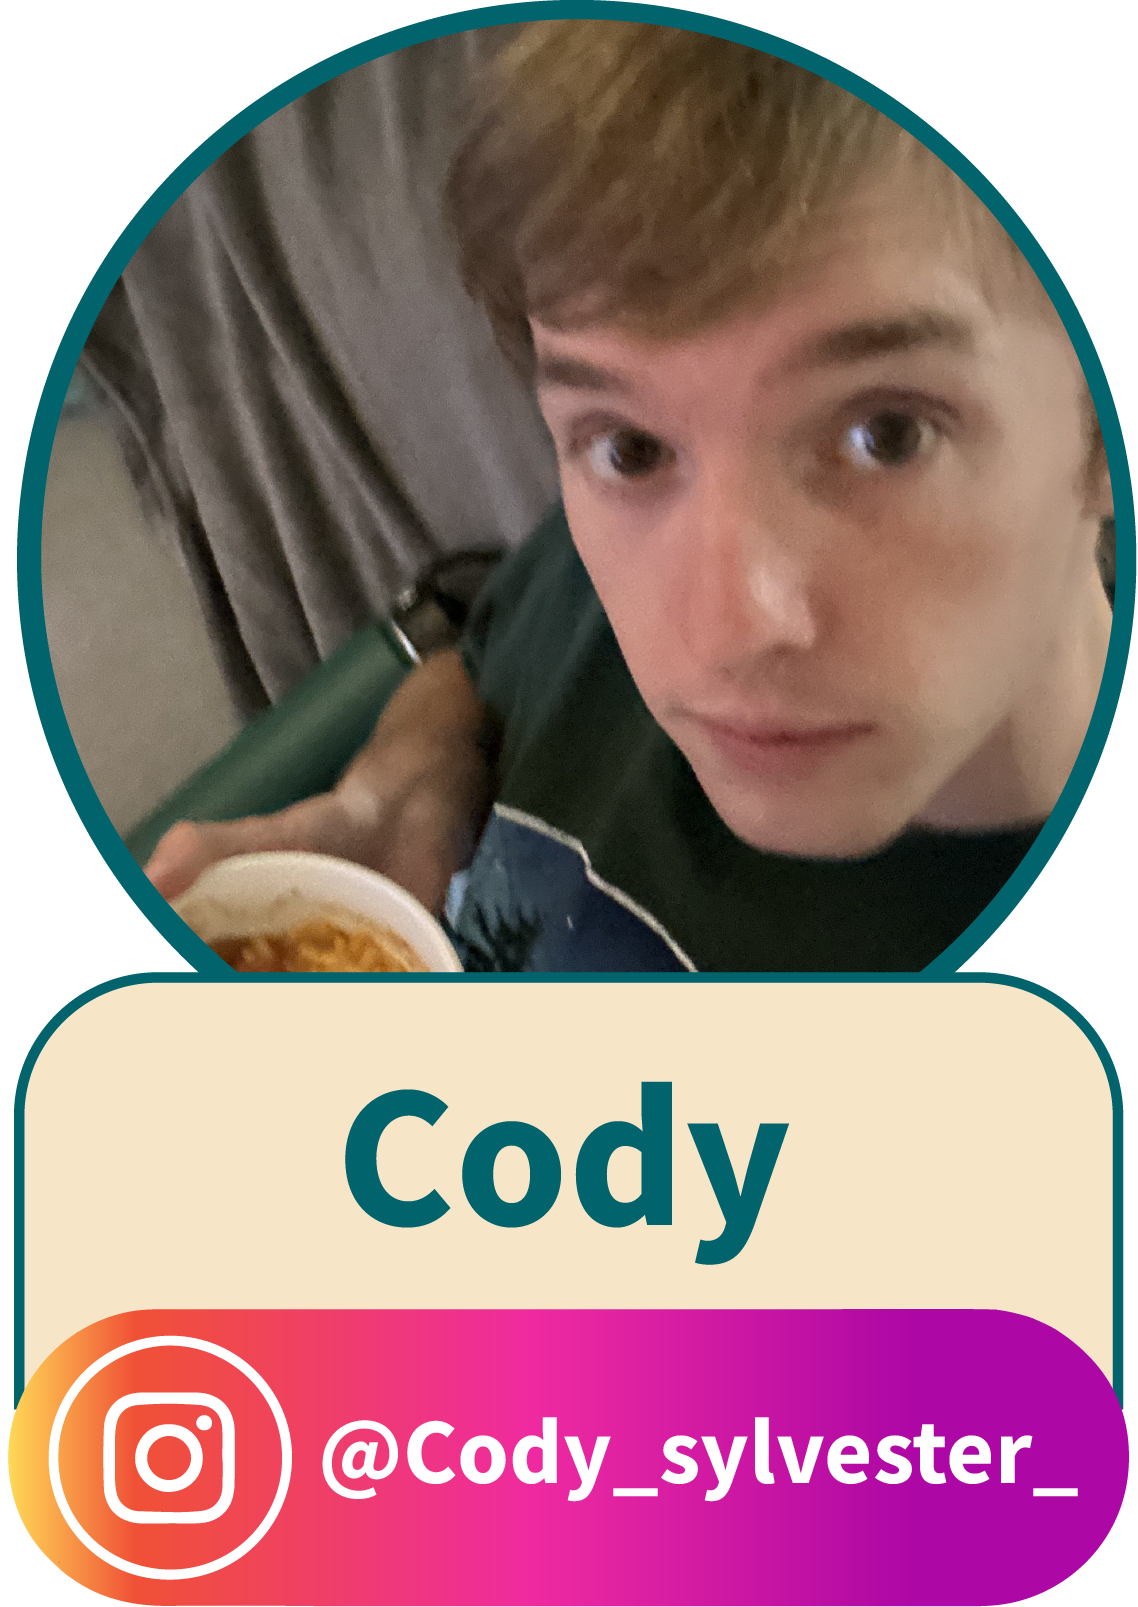 Cody image